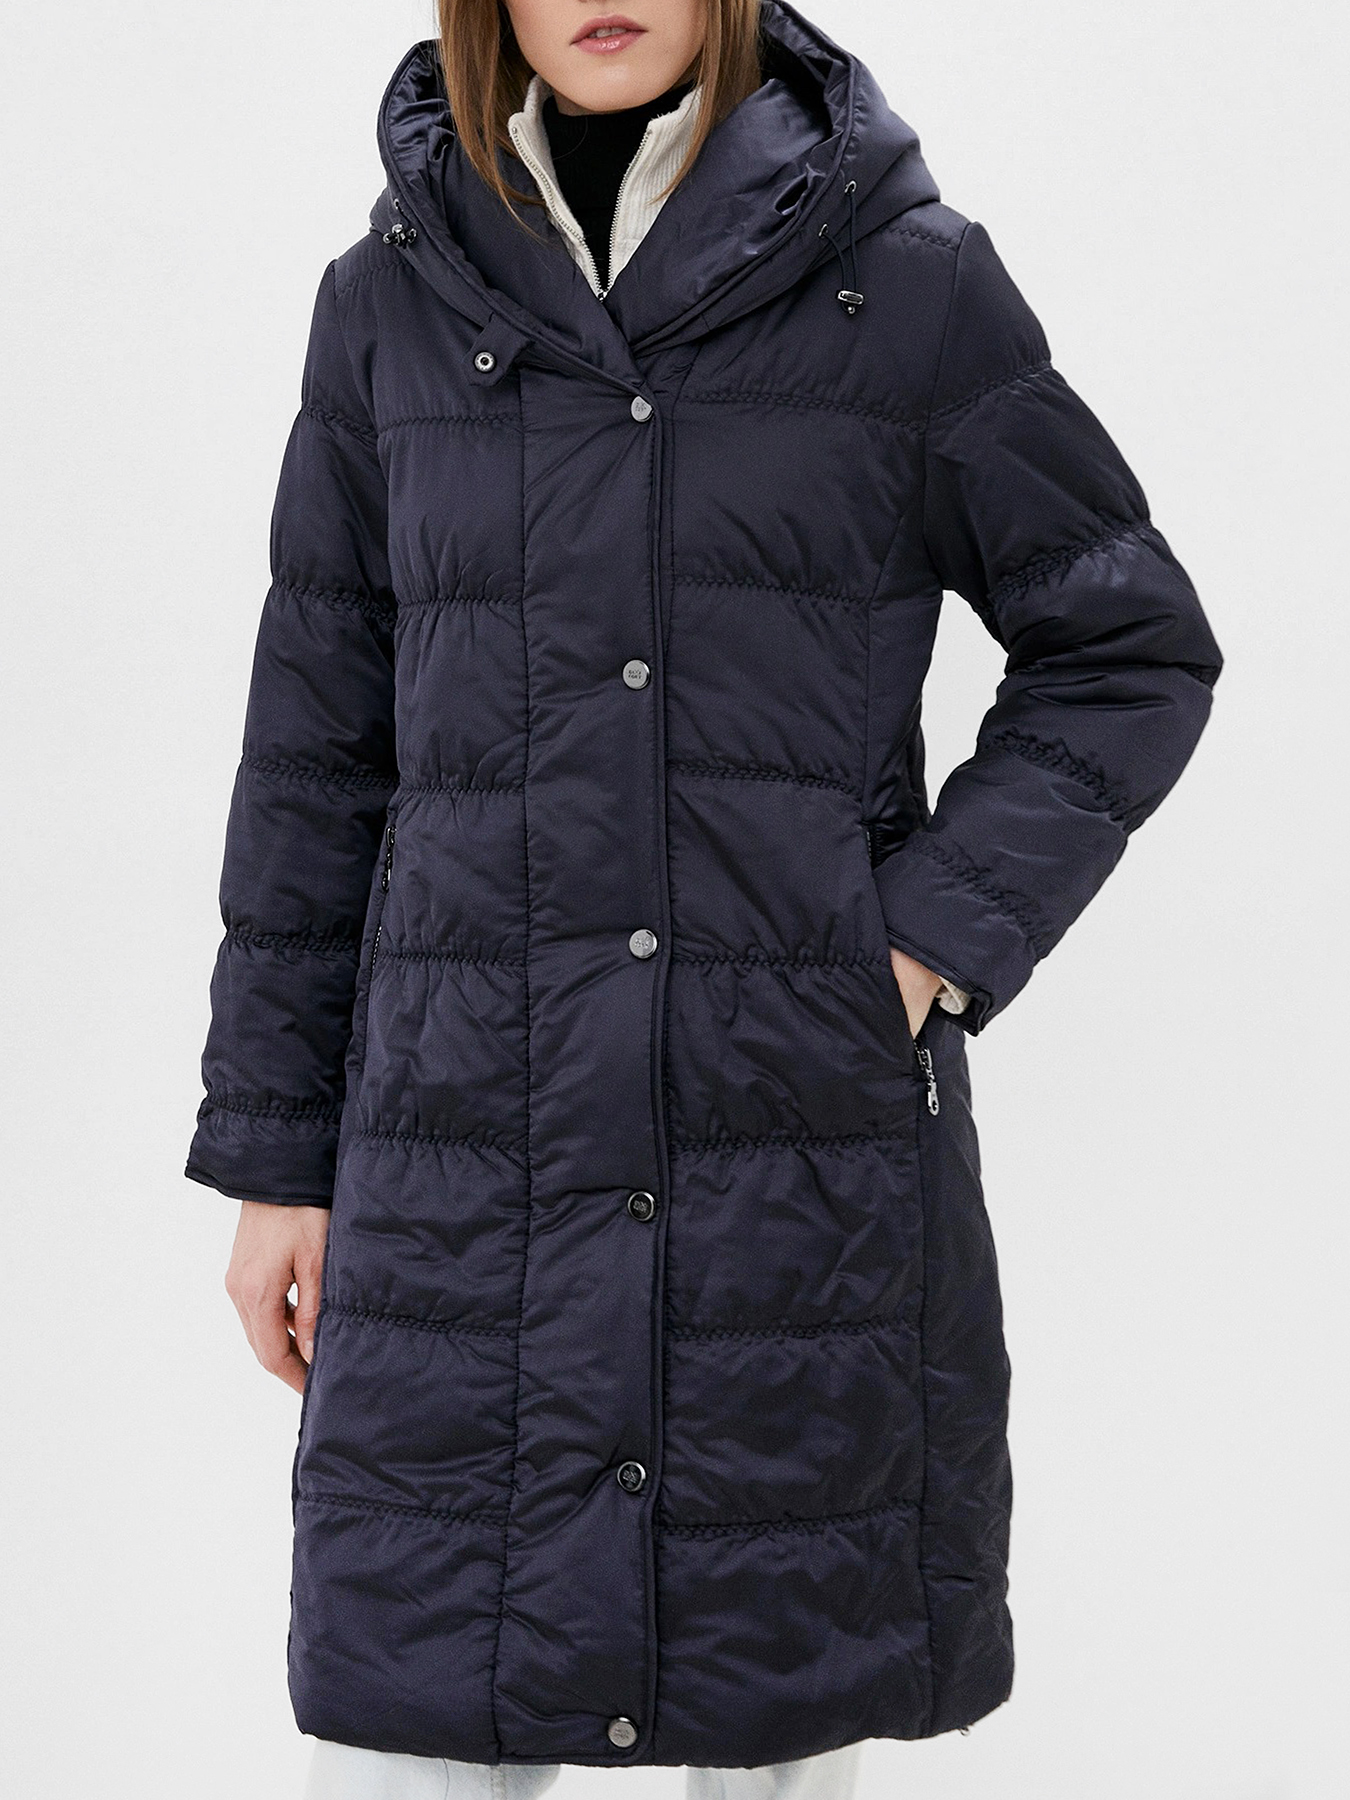 Пальто зимнее Dixi Coat 433576-020, цвет темно-синий, размер 44